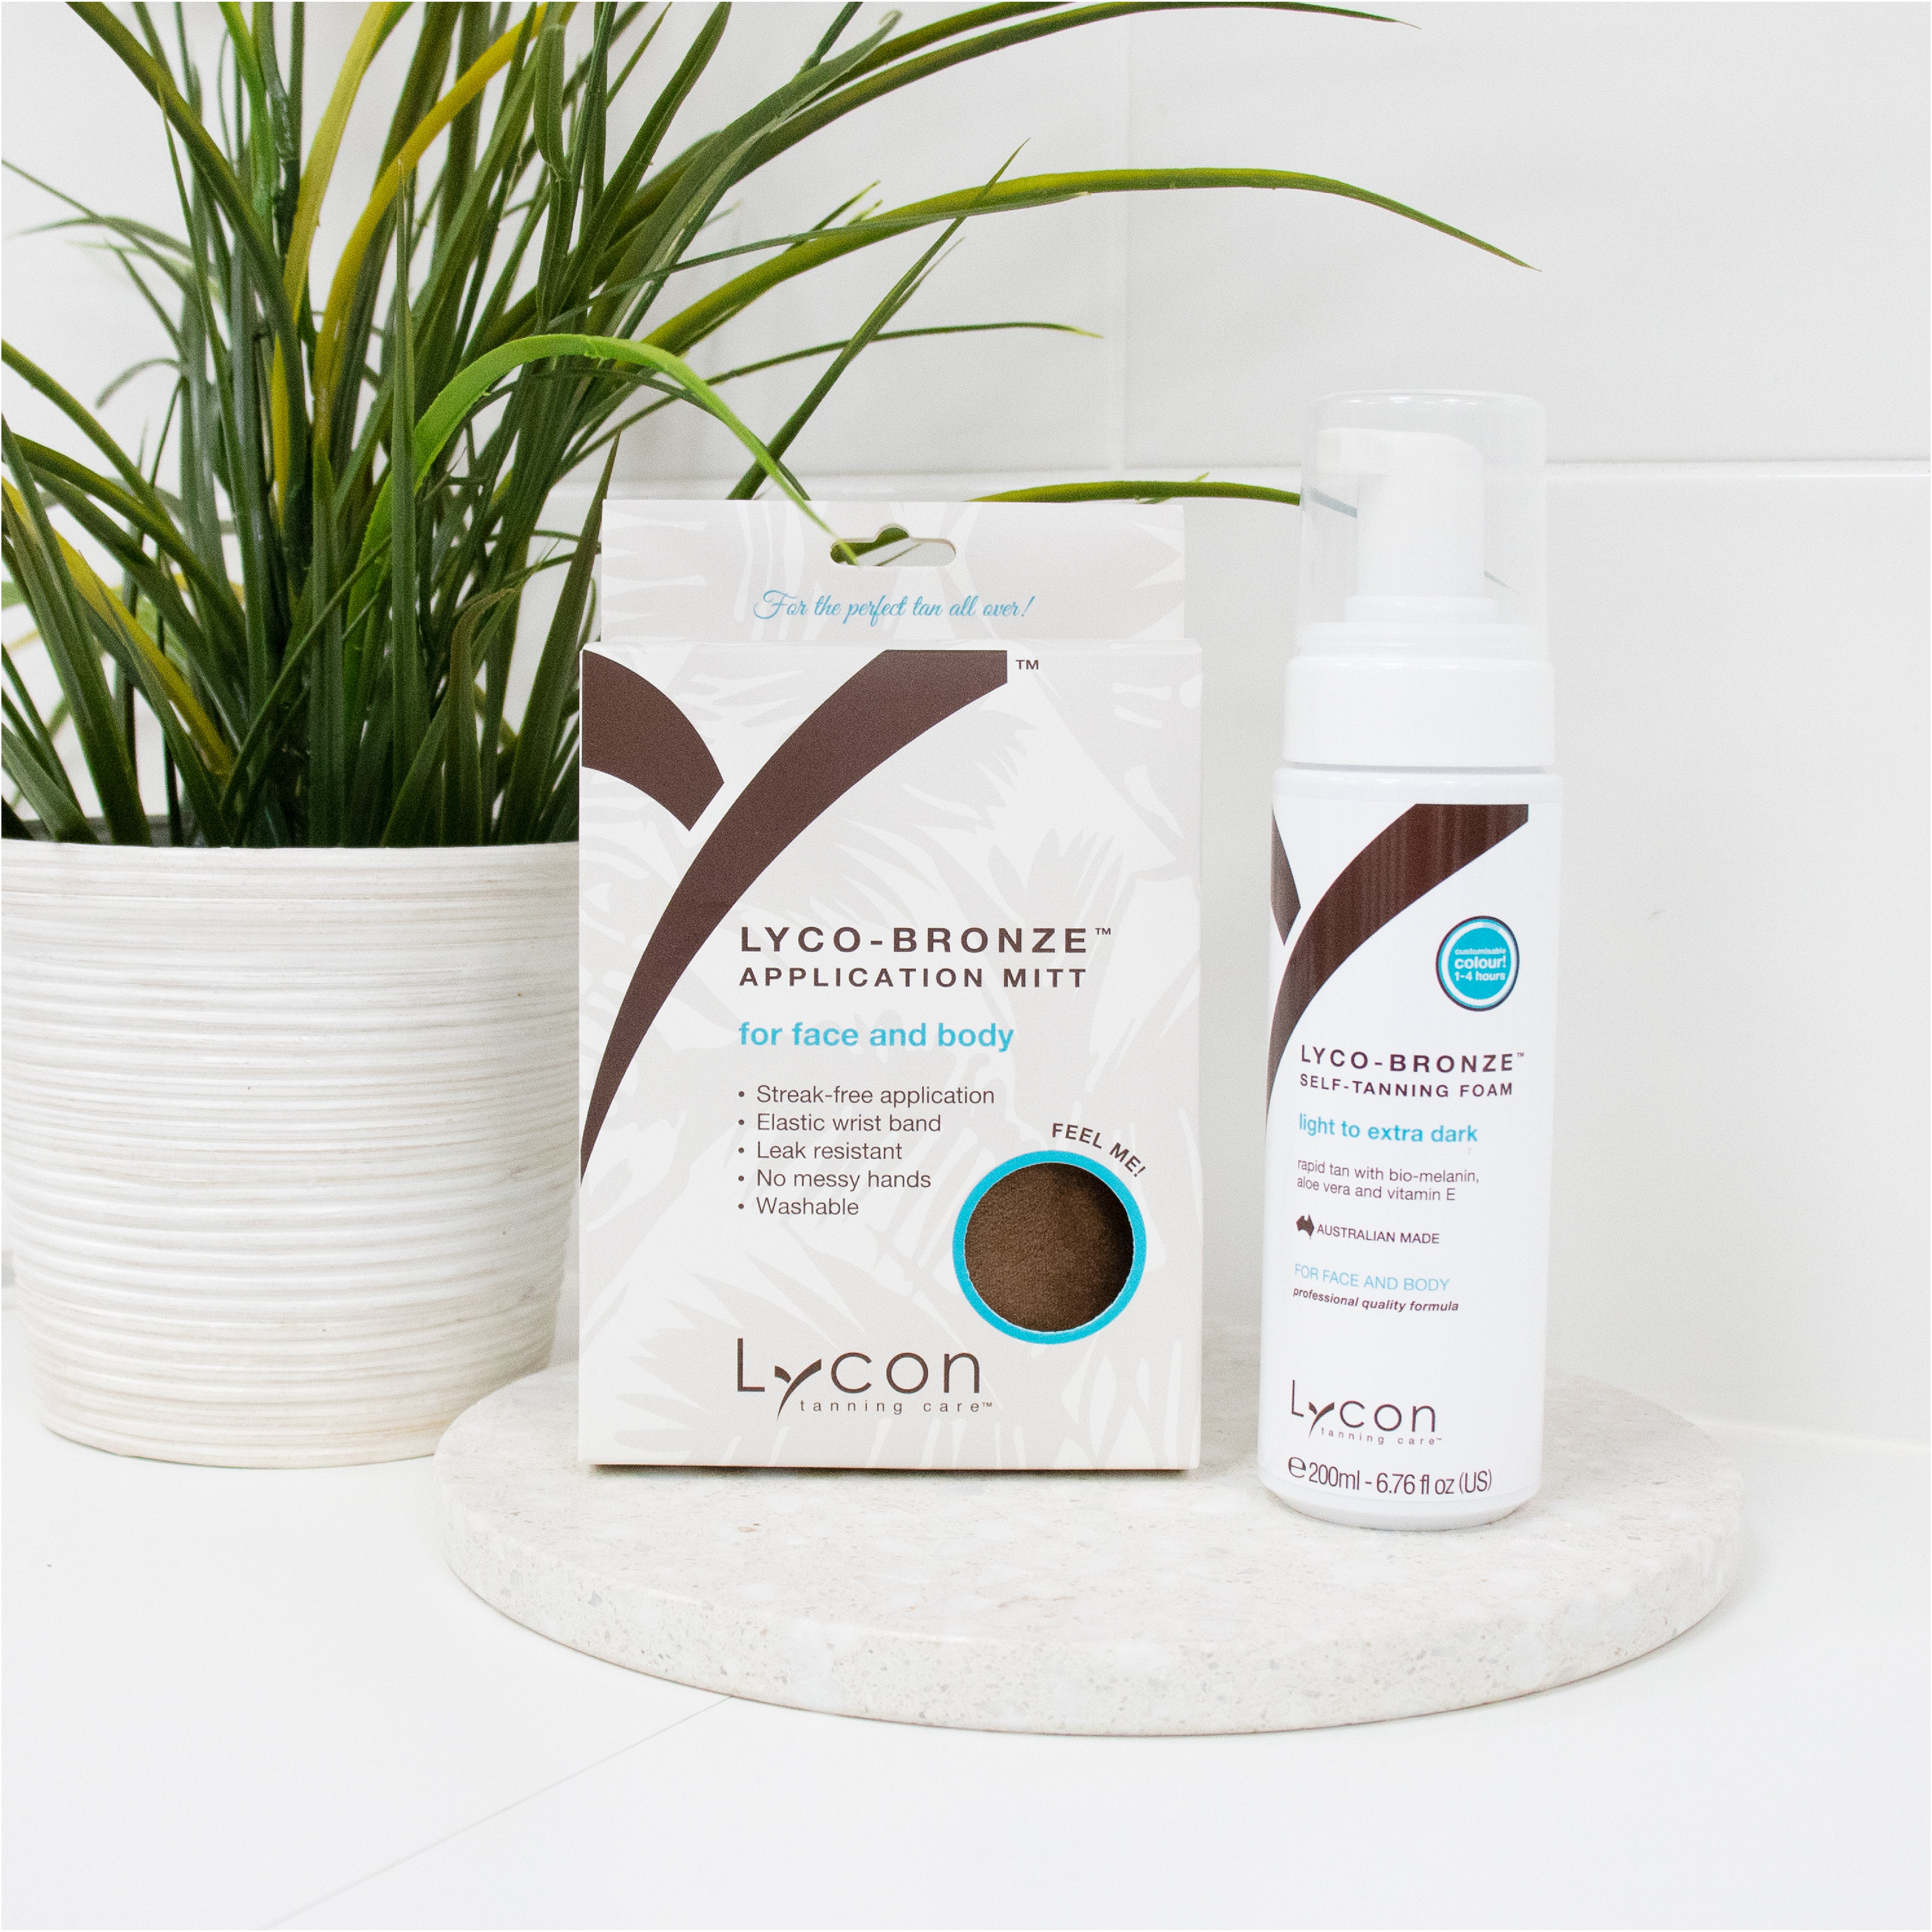 Lyco-Bronze Tanning Foam + Tanning Mitt - Retail